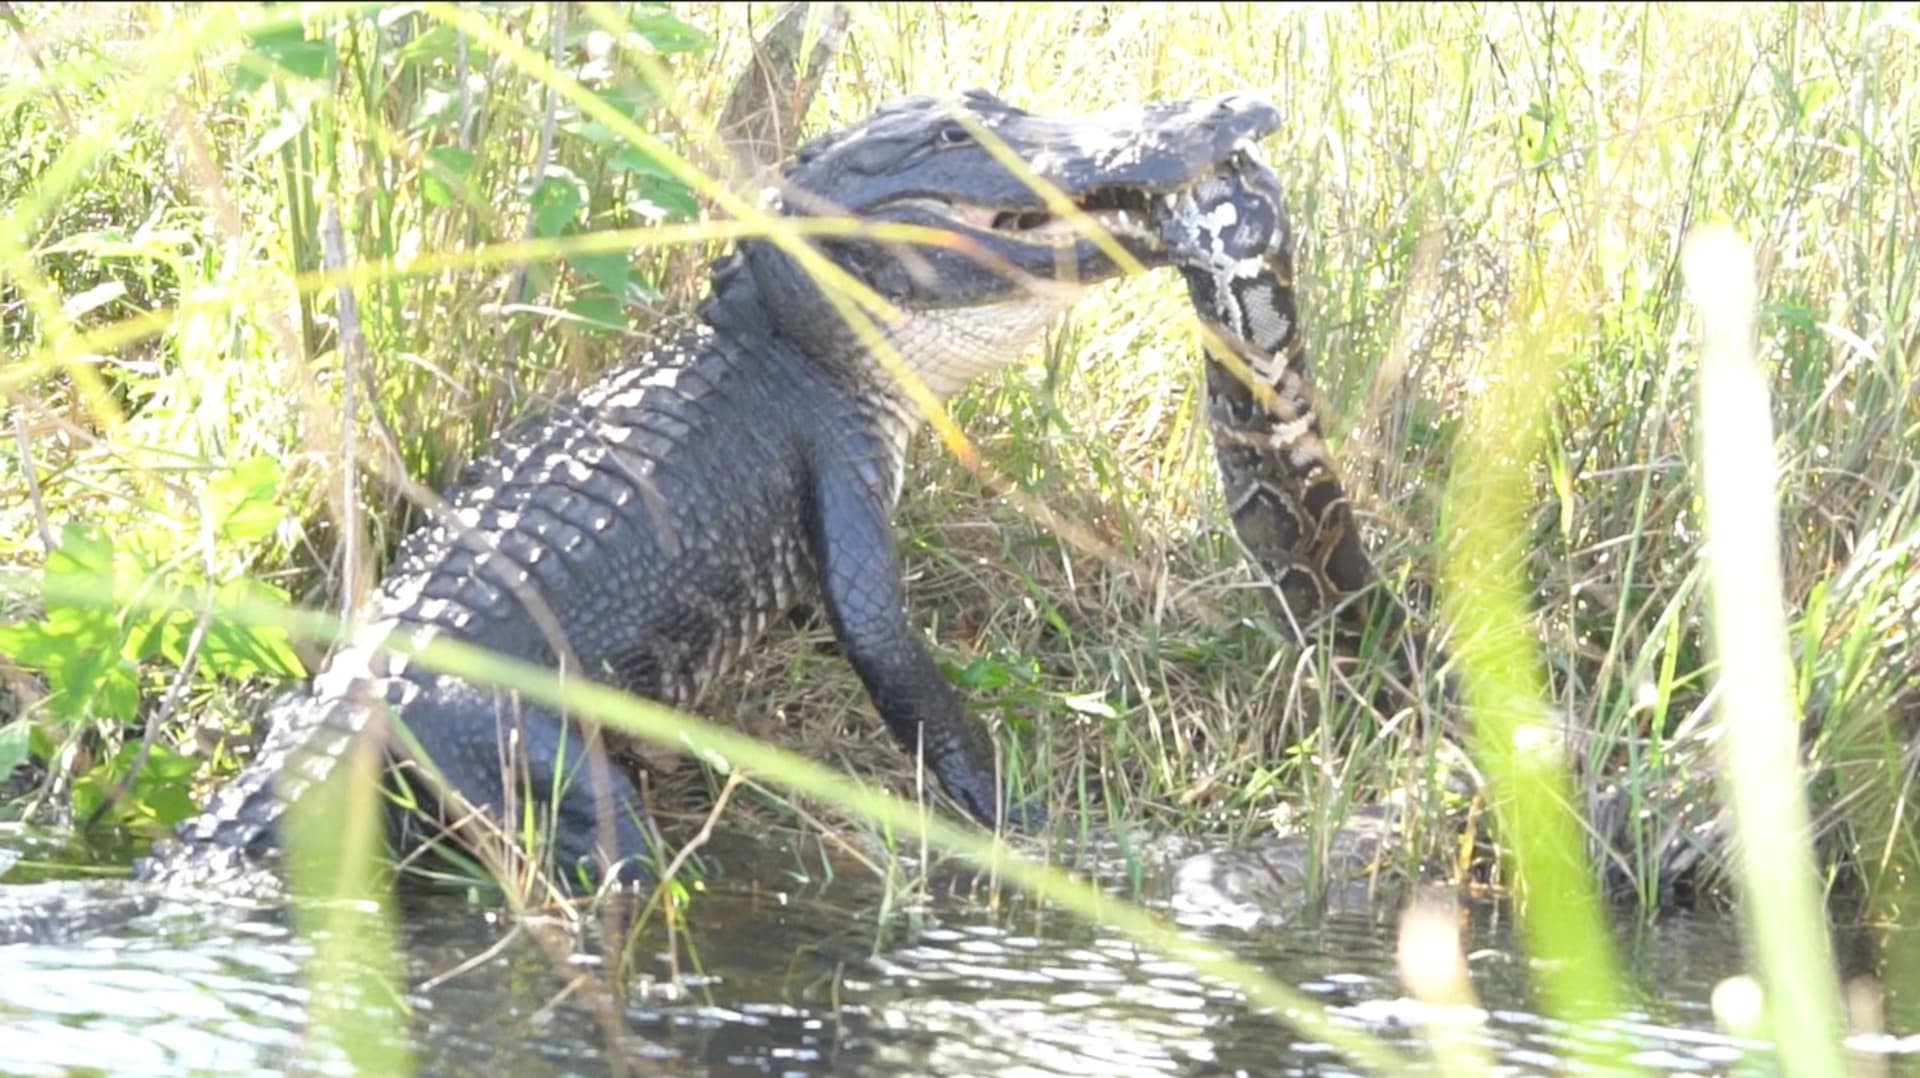 Souboj aligátora s krajtou v národním parku Everglades